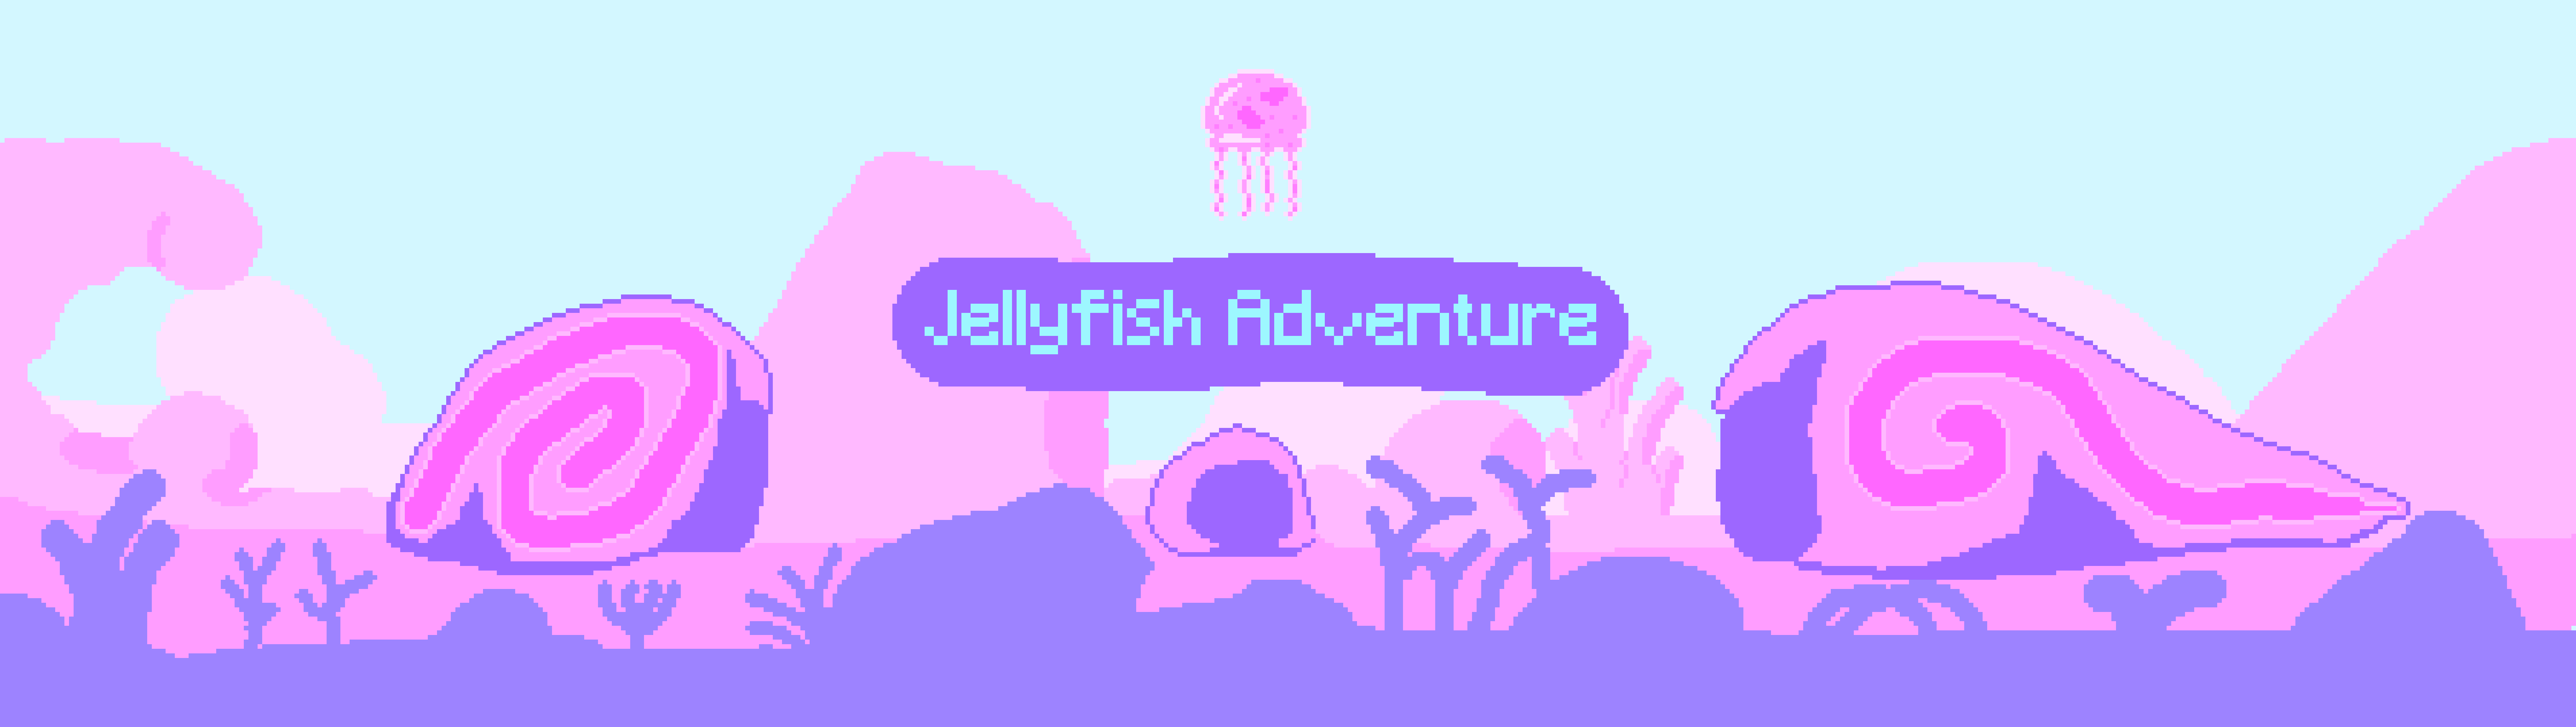 Jellyfish Adventure